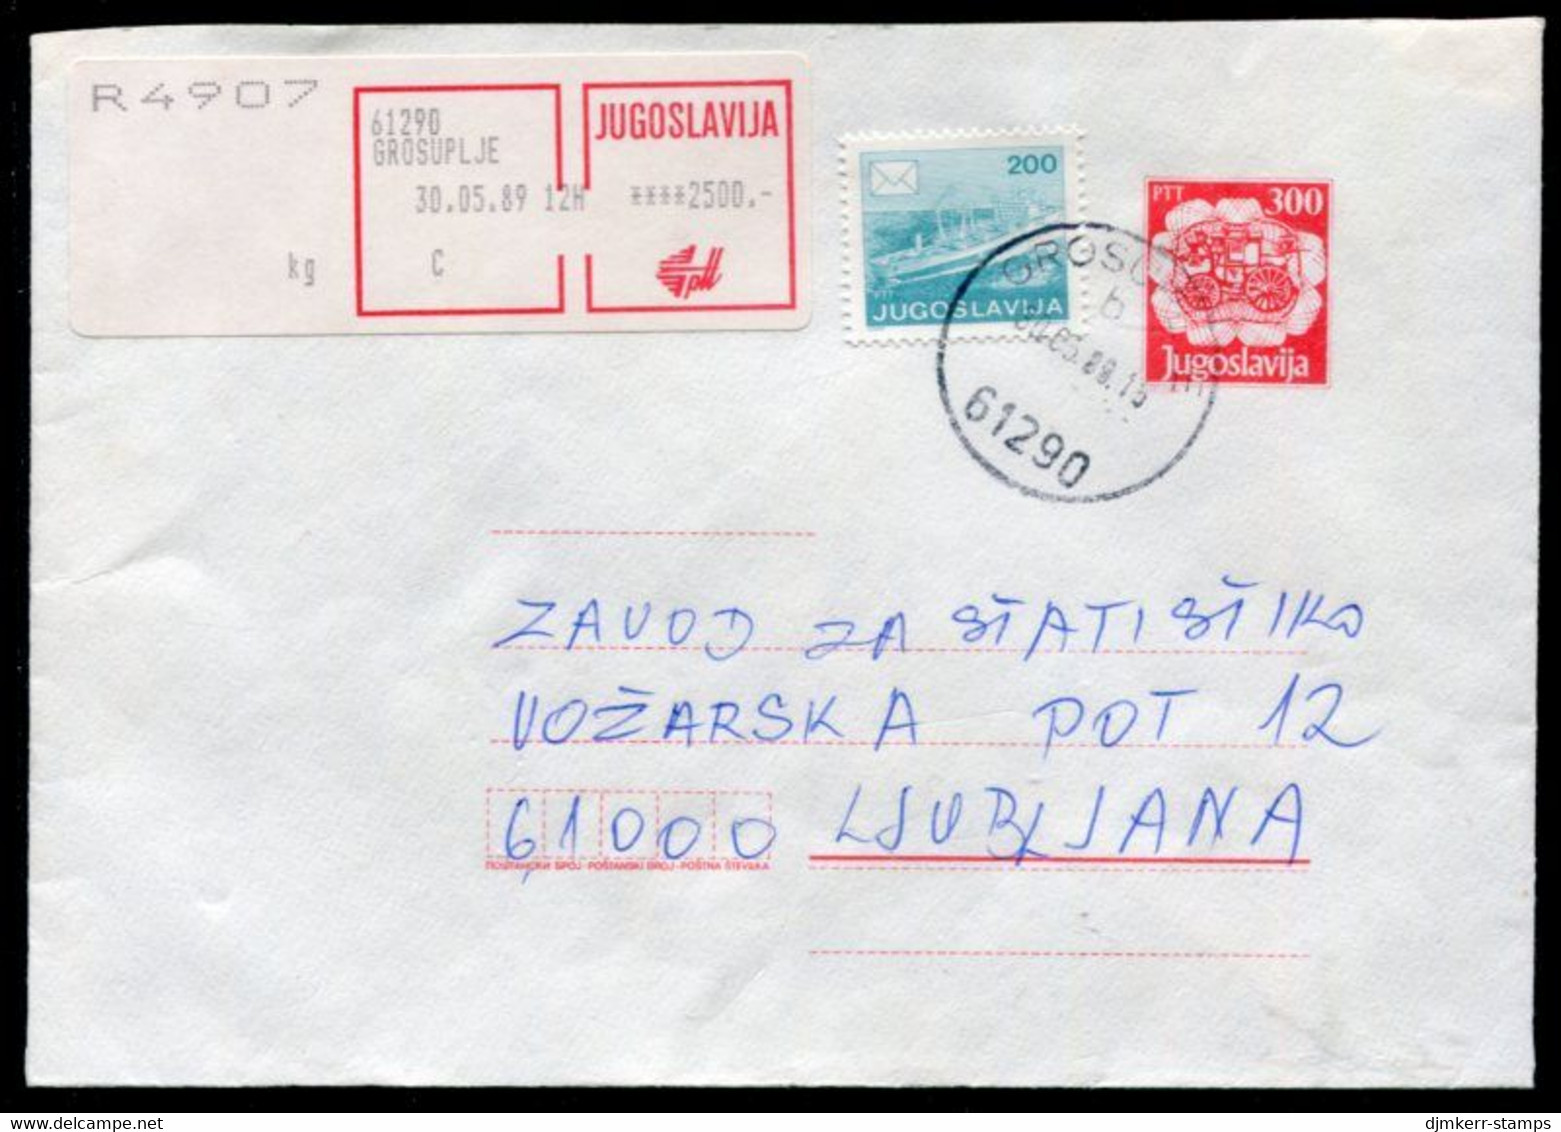 YUGOSLAVIA 1989 Mailcoach 300 D.stationery Envelope Registered With Additional Franking.  Michel U89 - Interi Postali